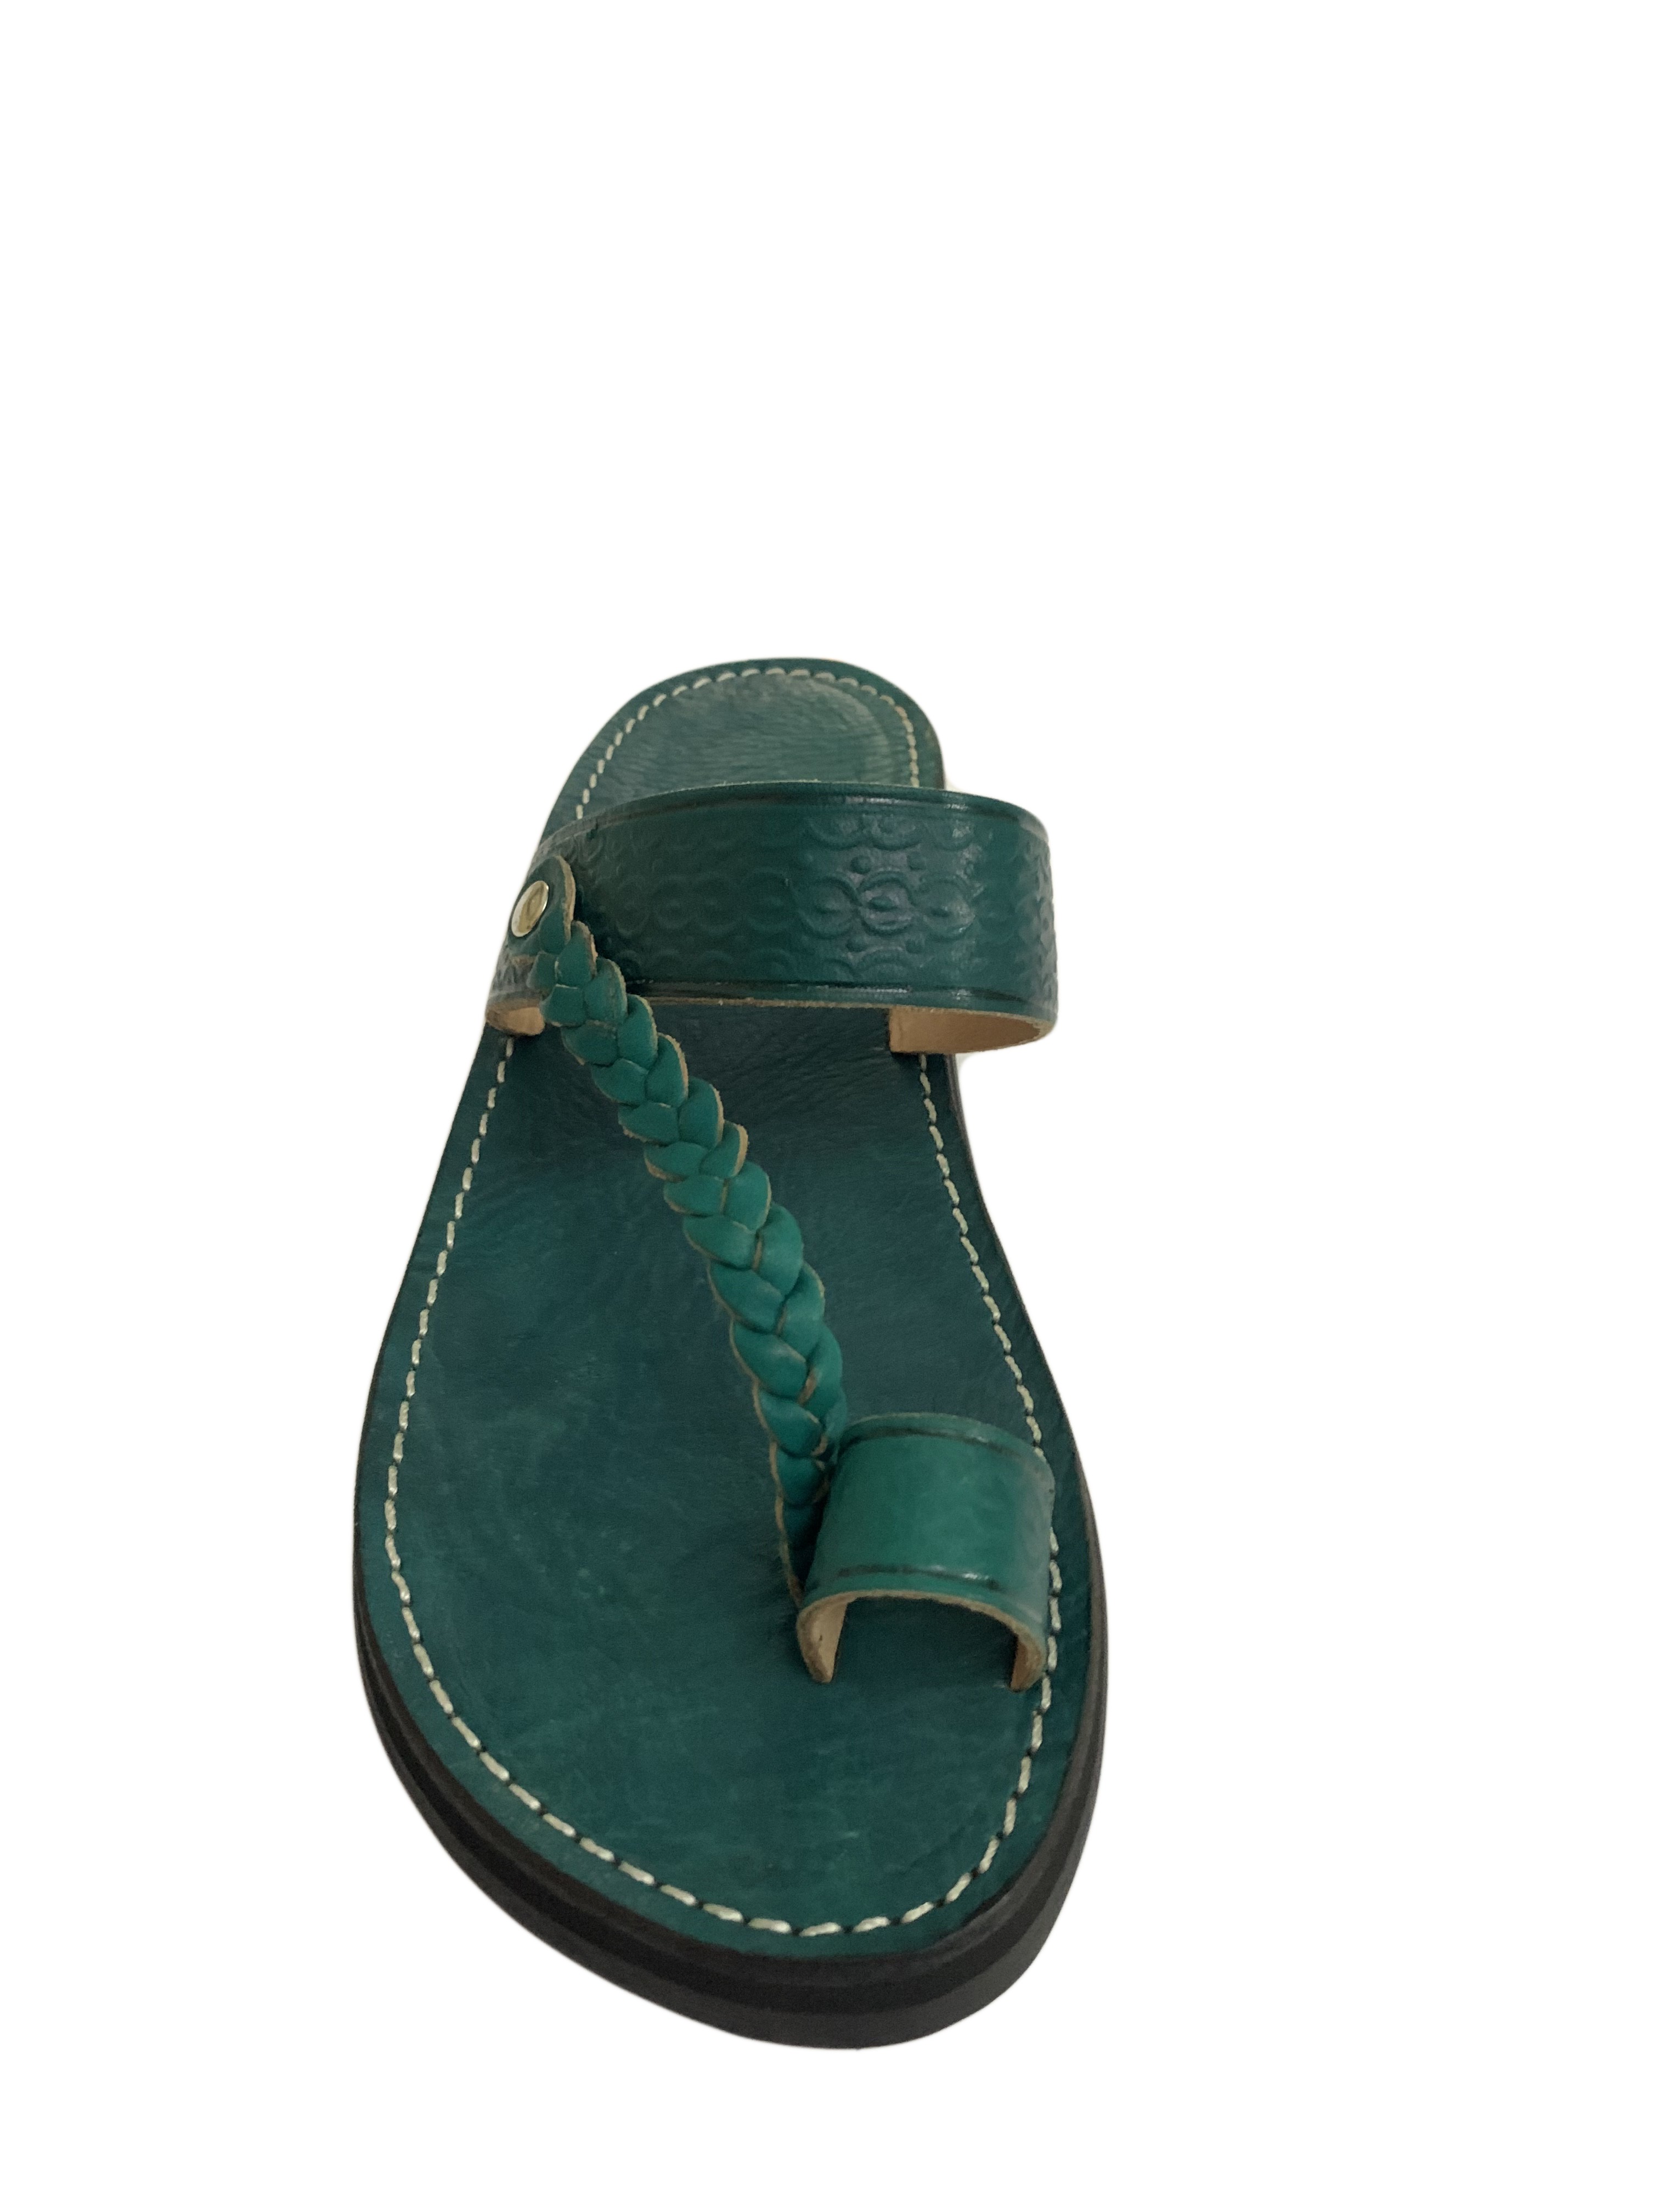 Leather sandal for women